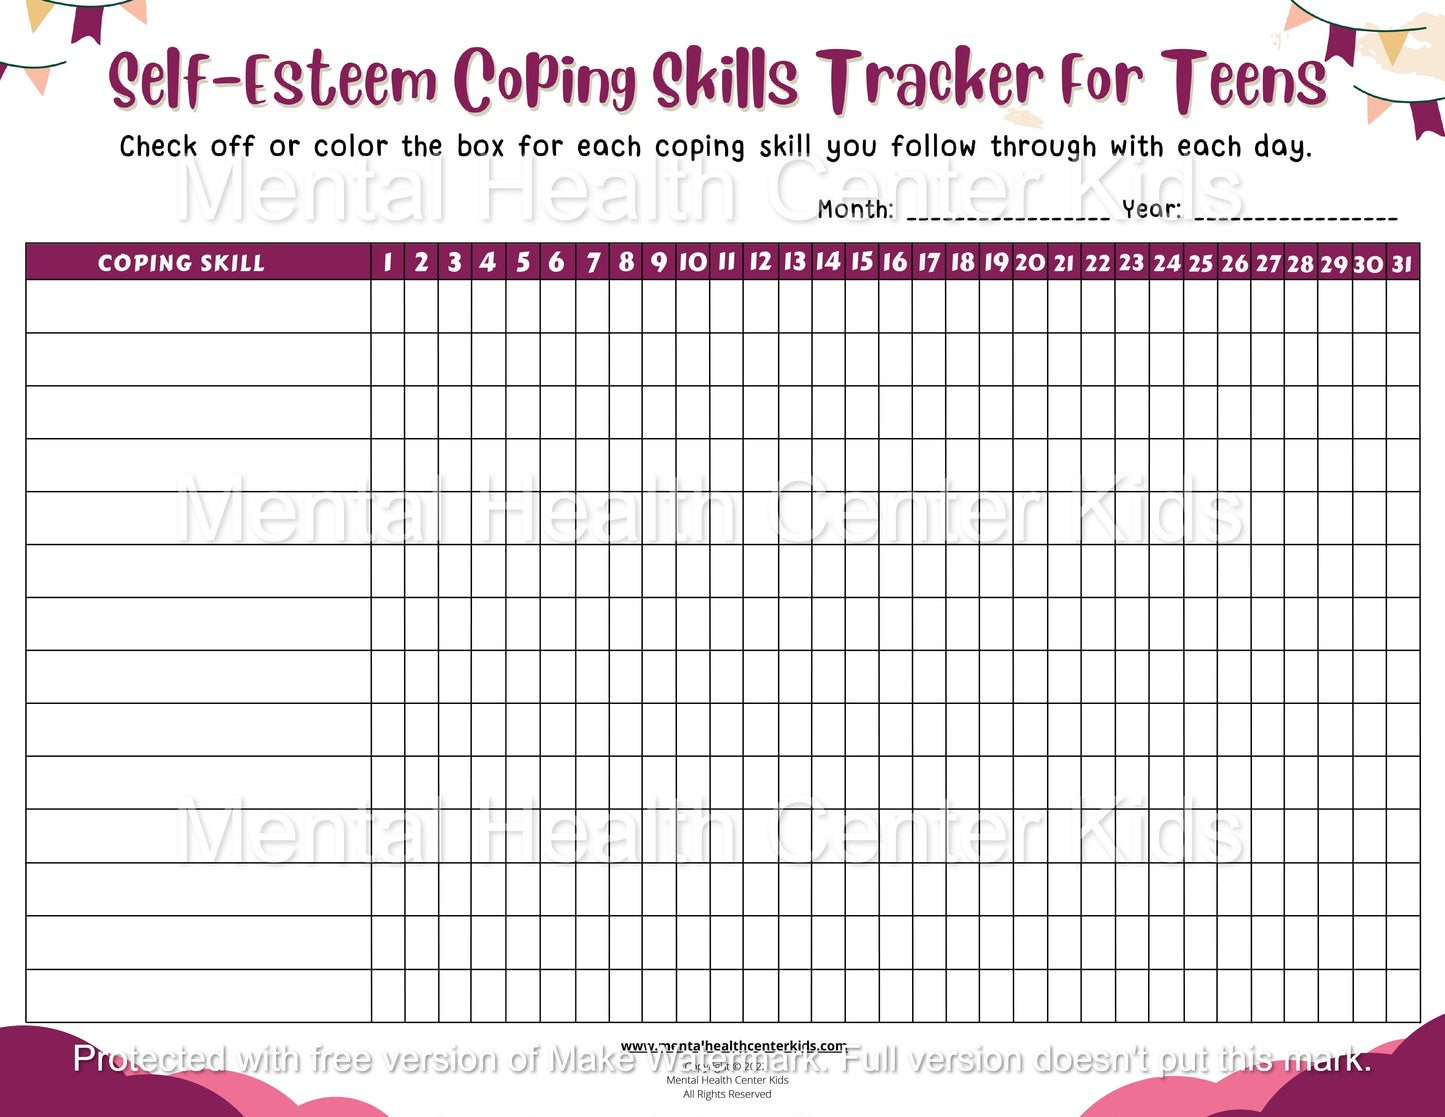 Self-Esteem Coping Skills Tracker for Teens Worksheet